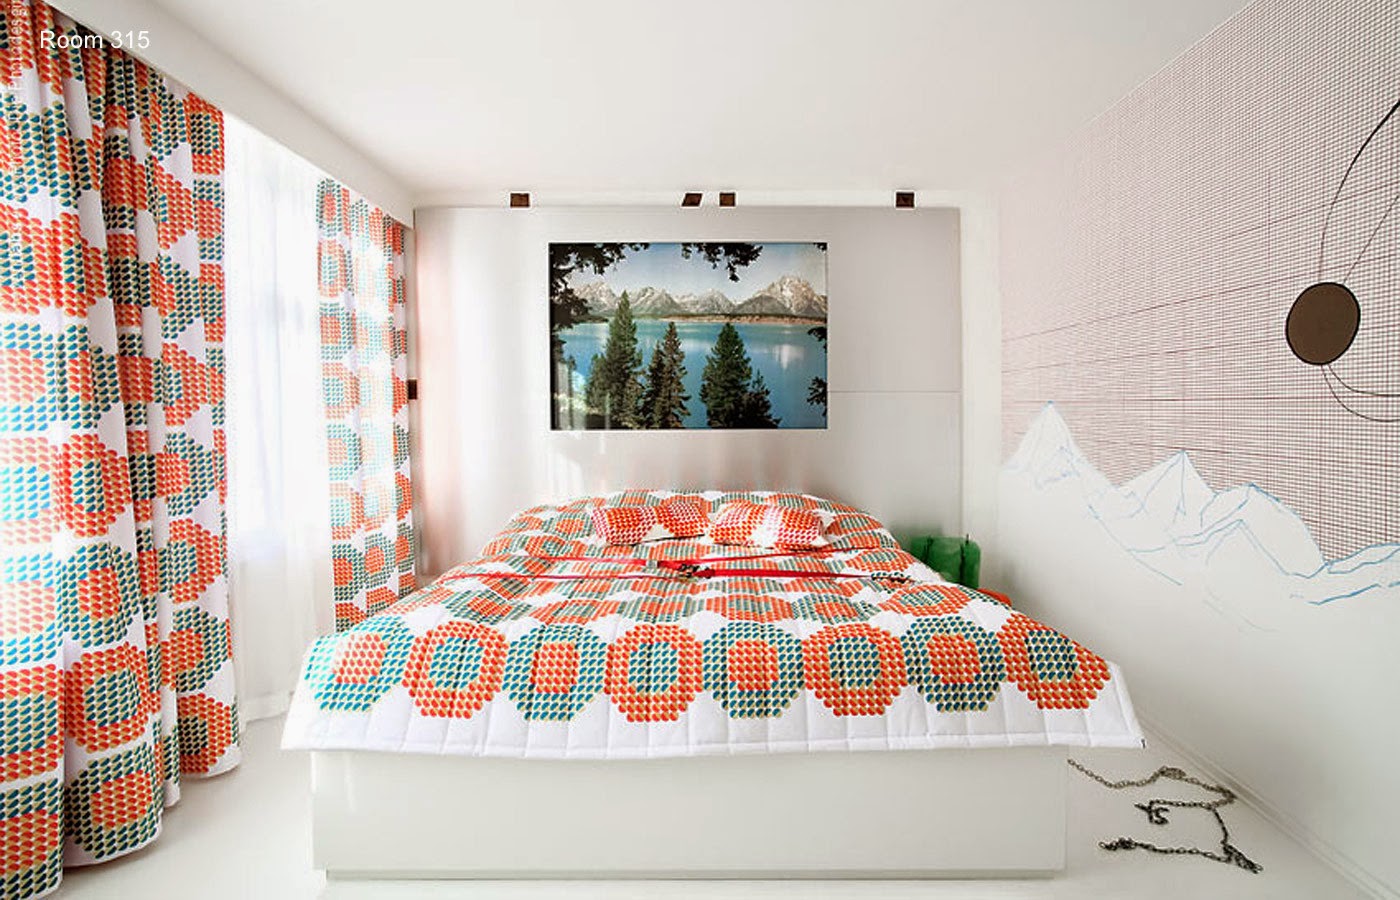 18-Hotel-Fox-Project-Fox-Room Designs-www-designstack-co